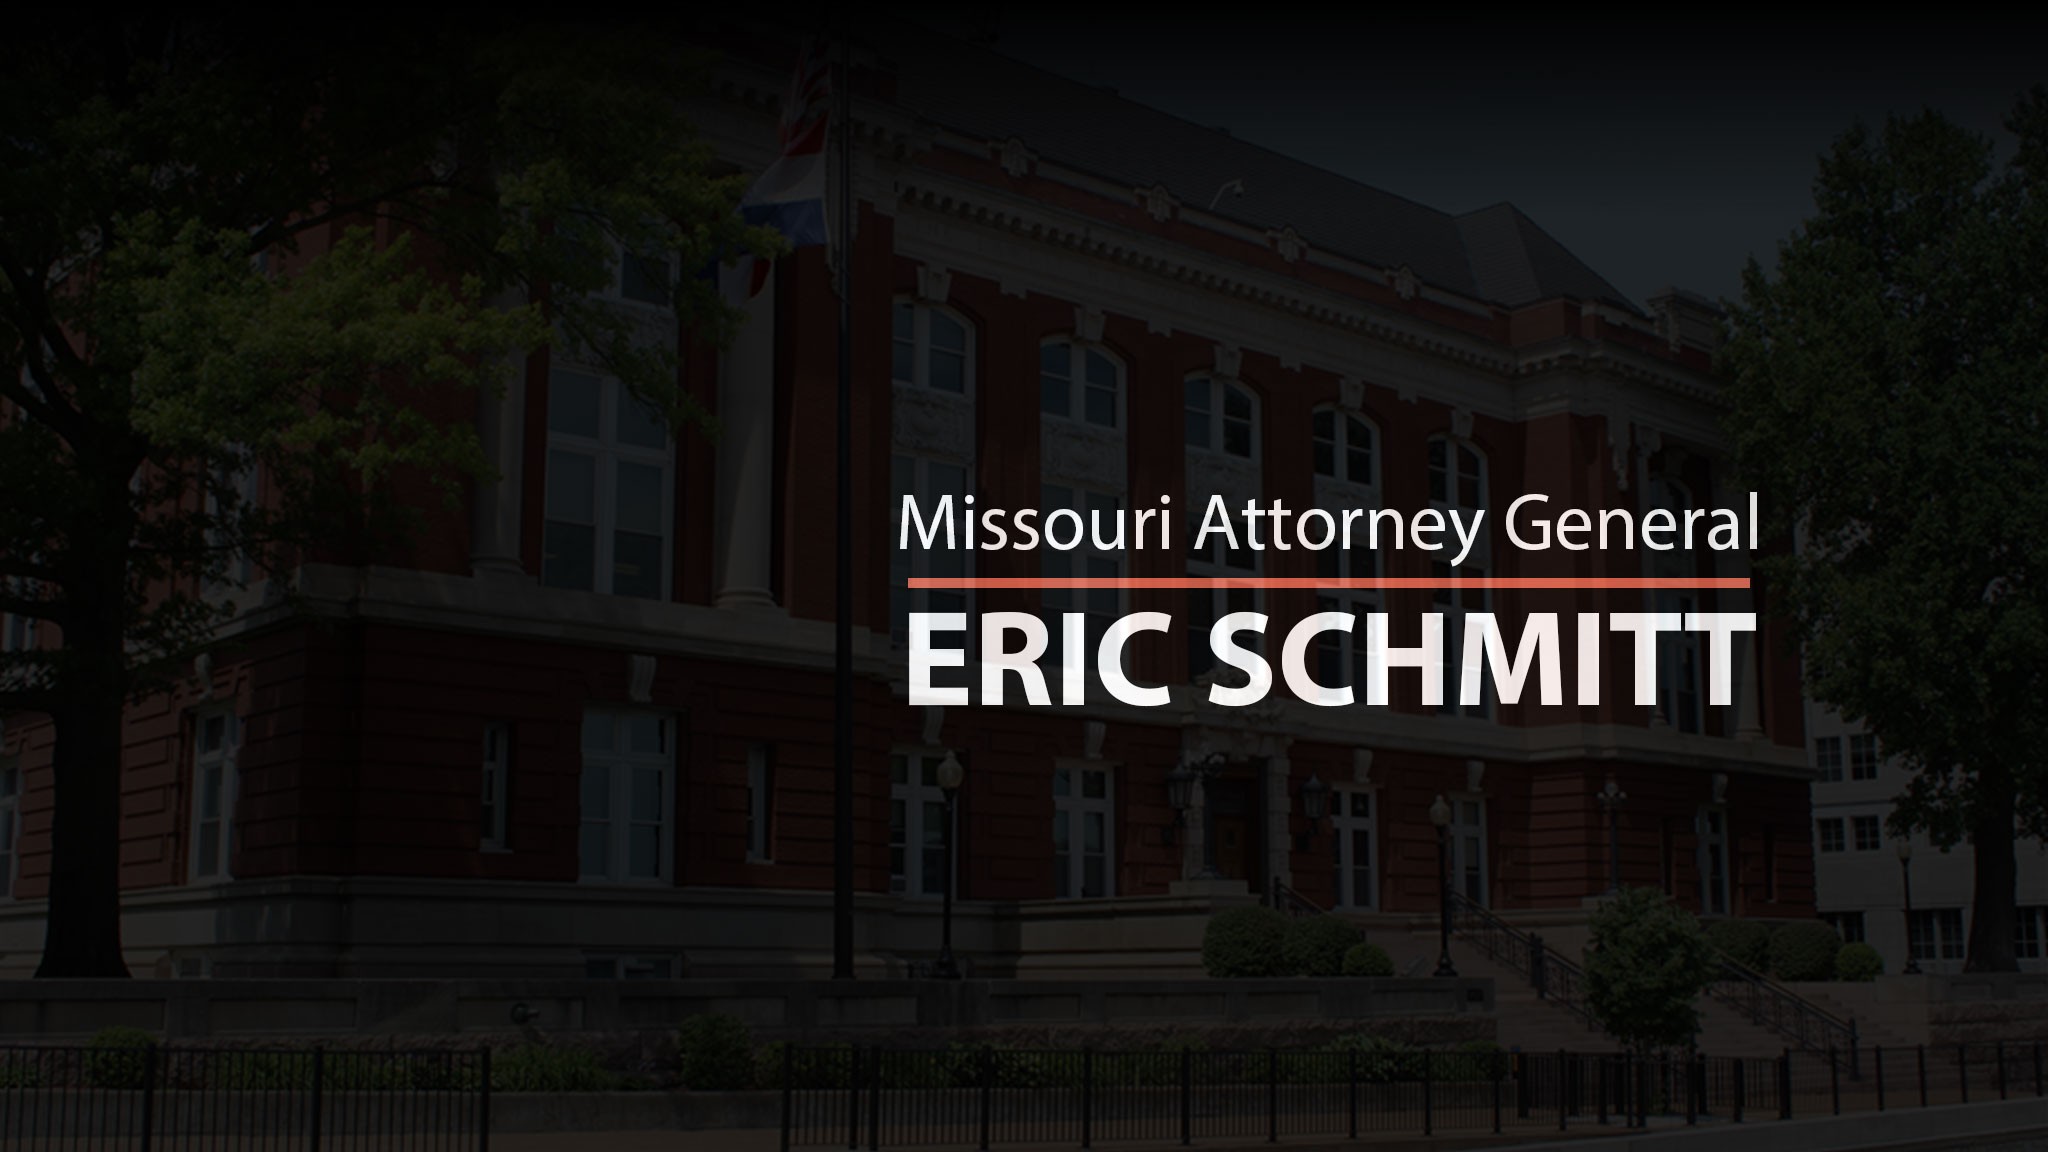 Missouri Attorney General S Office Linkedin